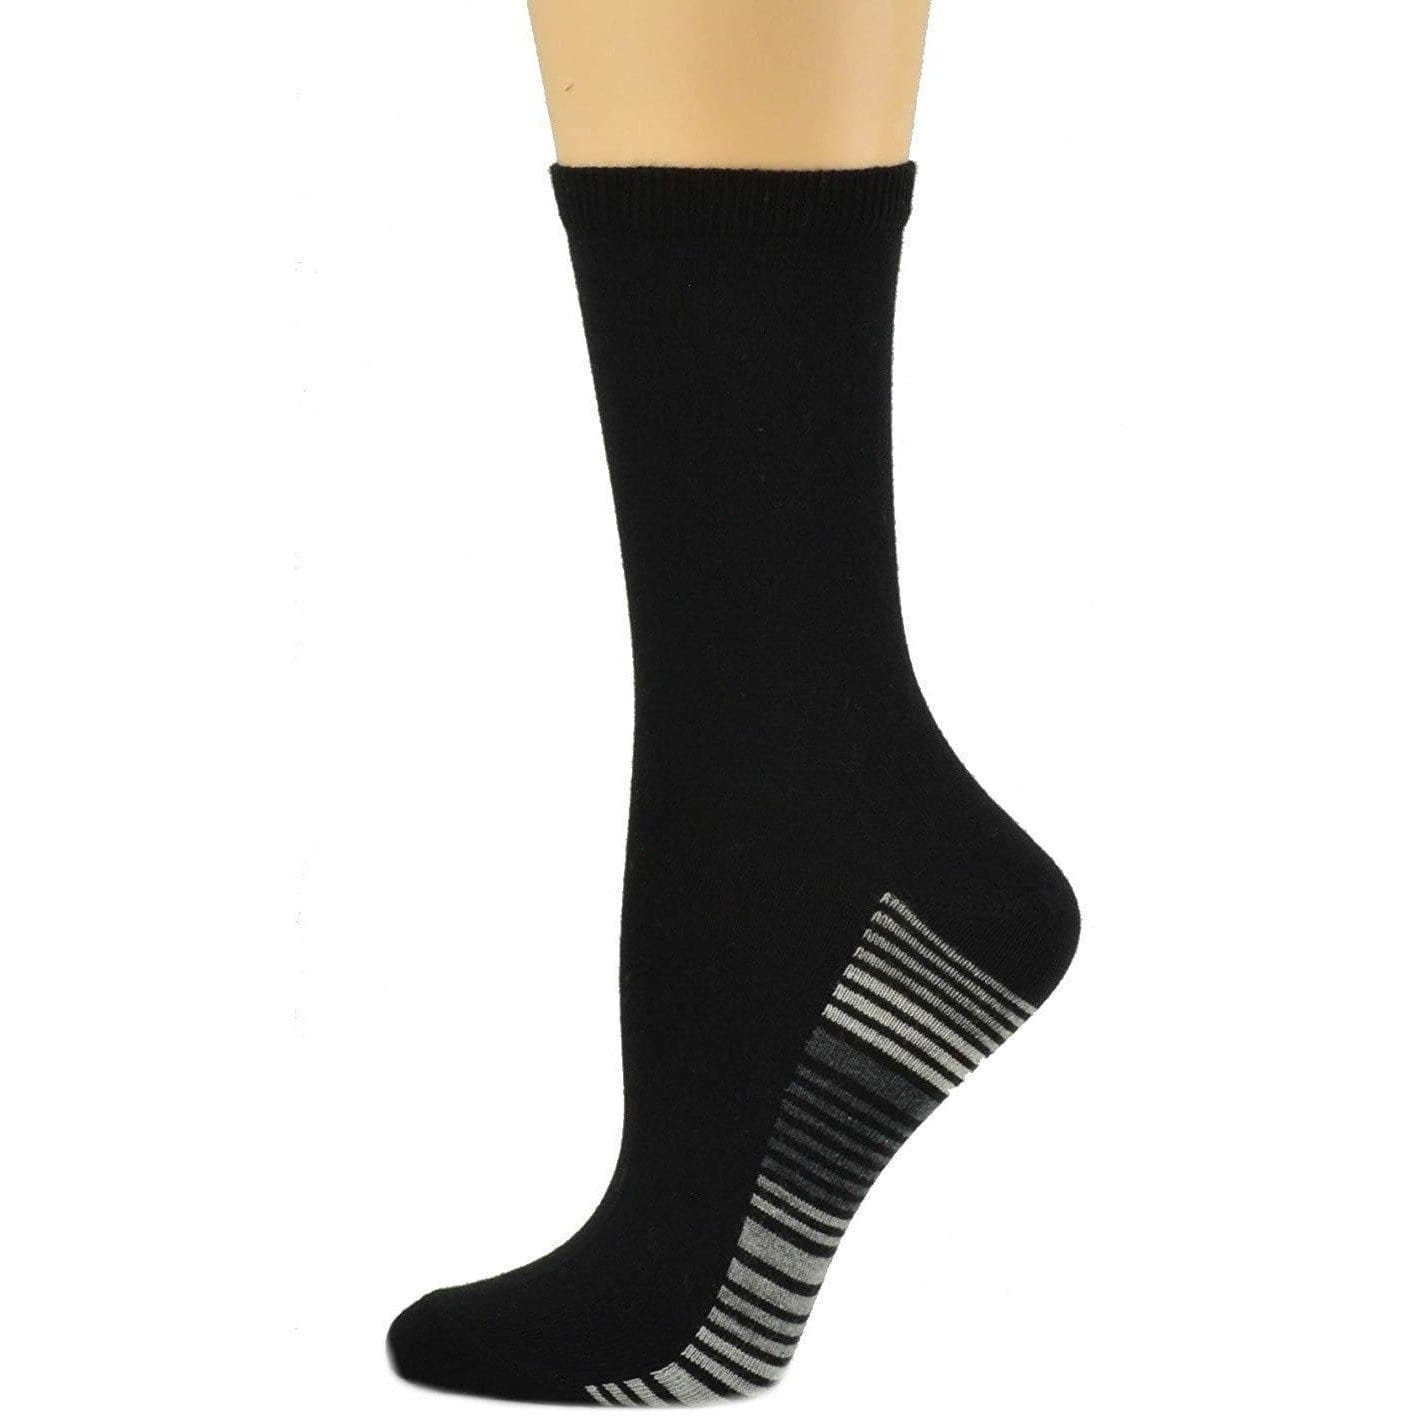 Sierra Socks Women's Striped Cotton 1 Pair or 3 Pair Pack Socks W89